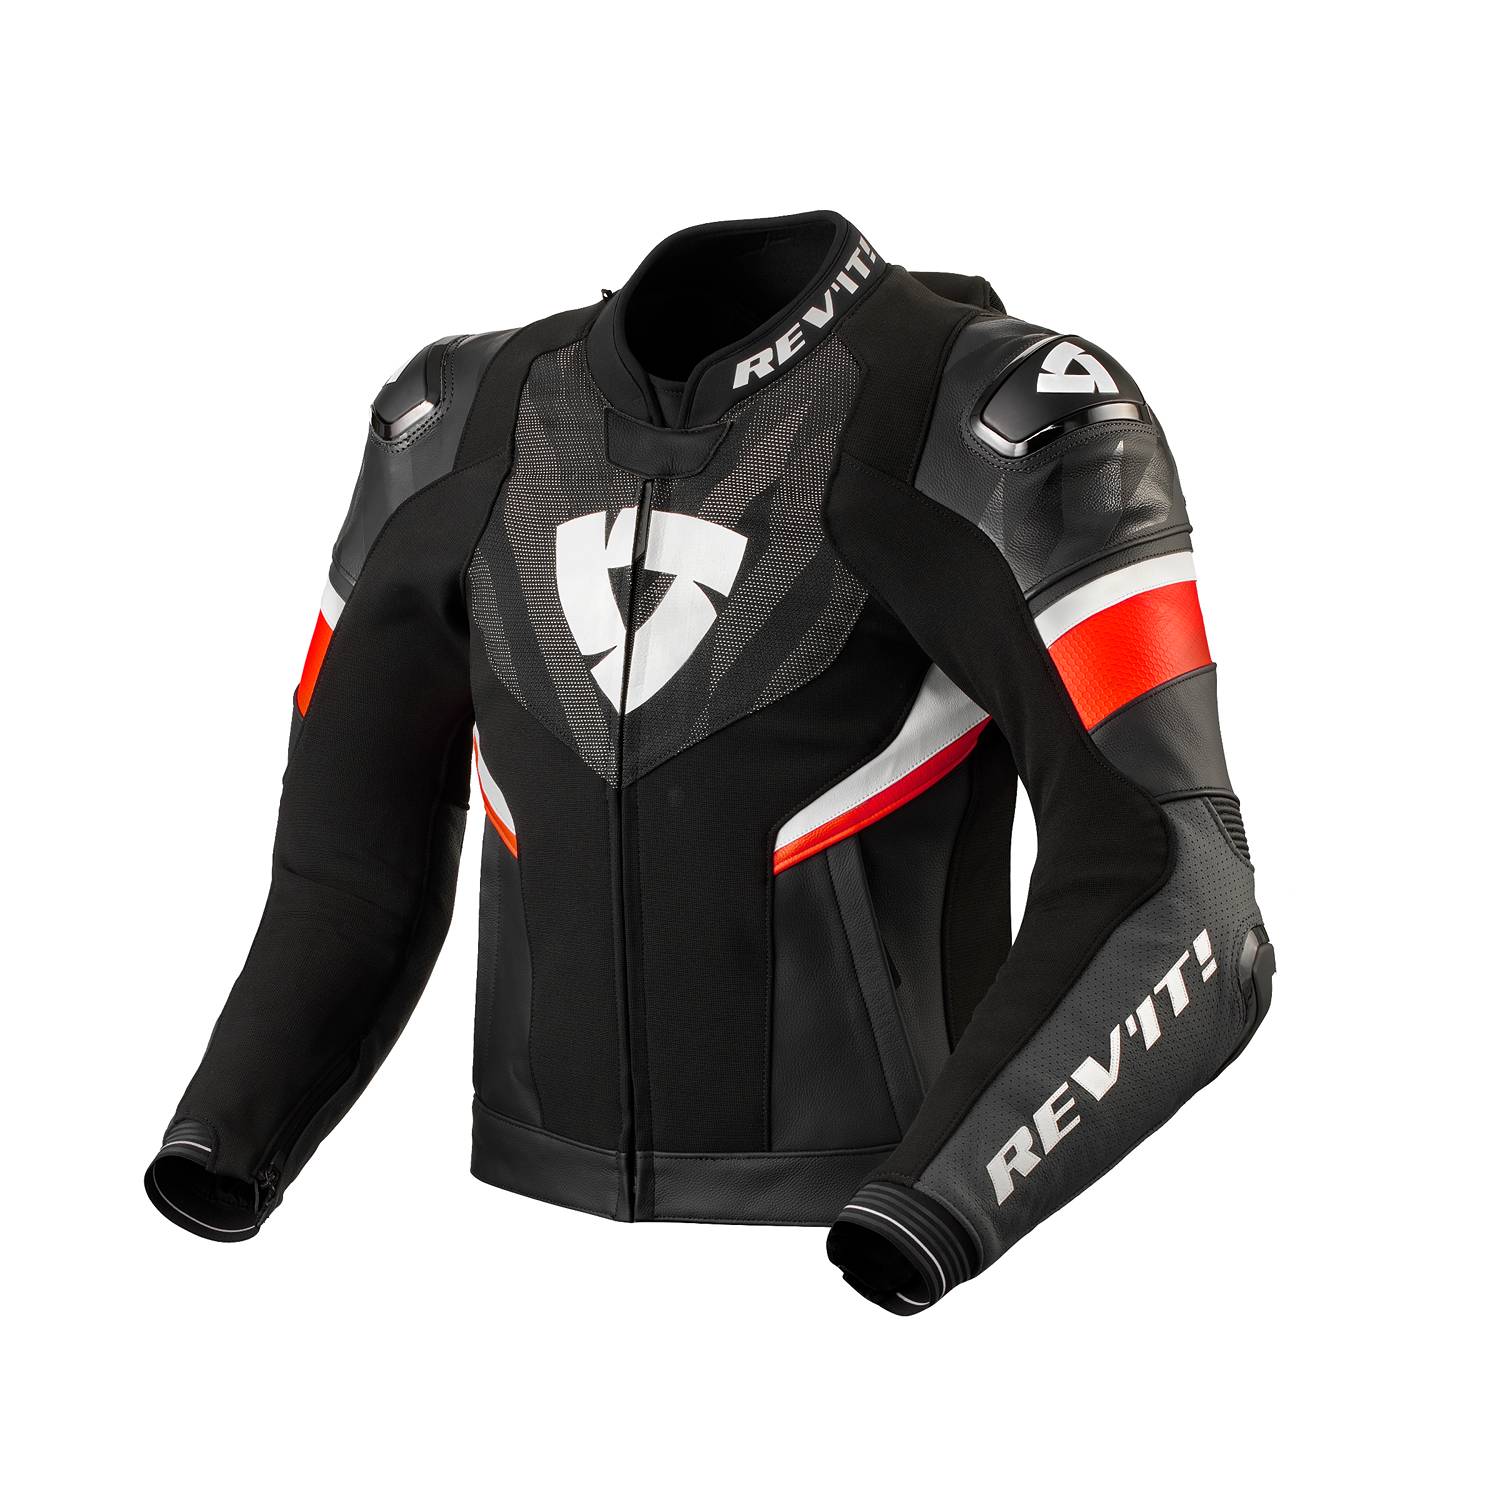 Image of REV'IT! Hyperspeed 2 Pro Jacket Black Neon Red Size 52 EN